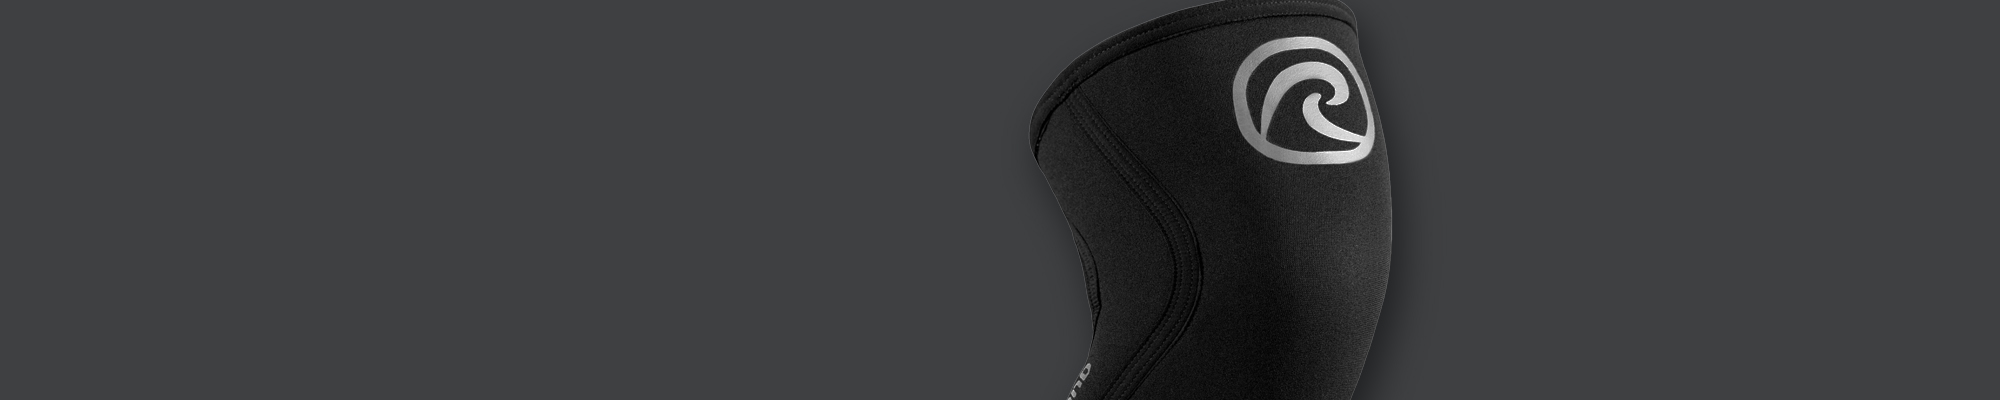 Rehband RX 5mm Knee Sleeve - Carbon Black